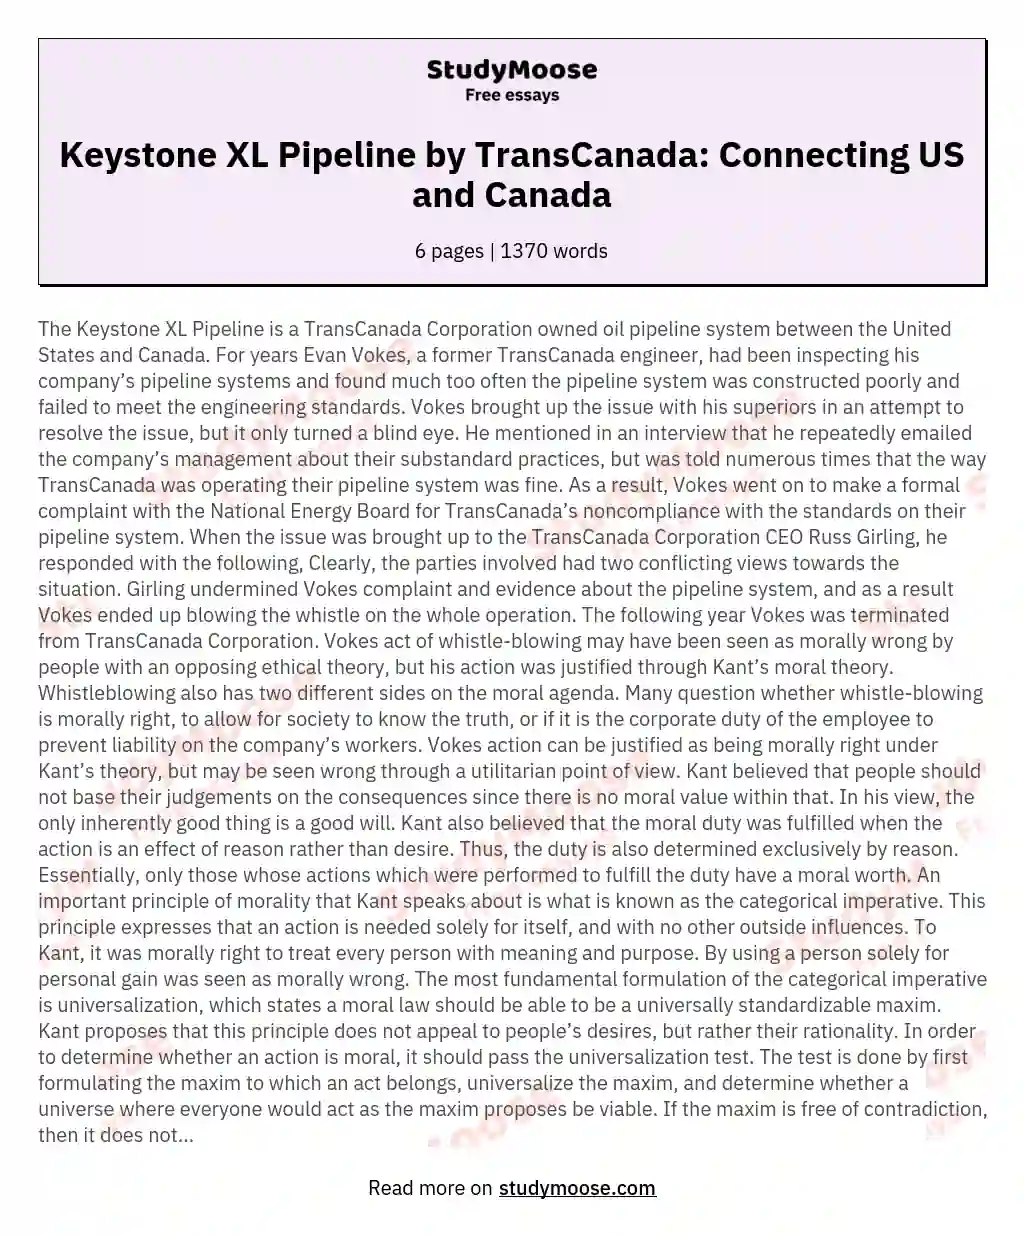 Keystone XL Pipeline by TransCanada: Connecting US and Canada essay